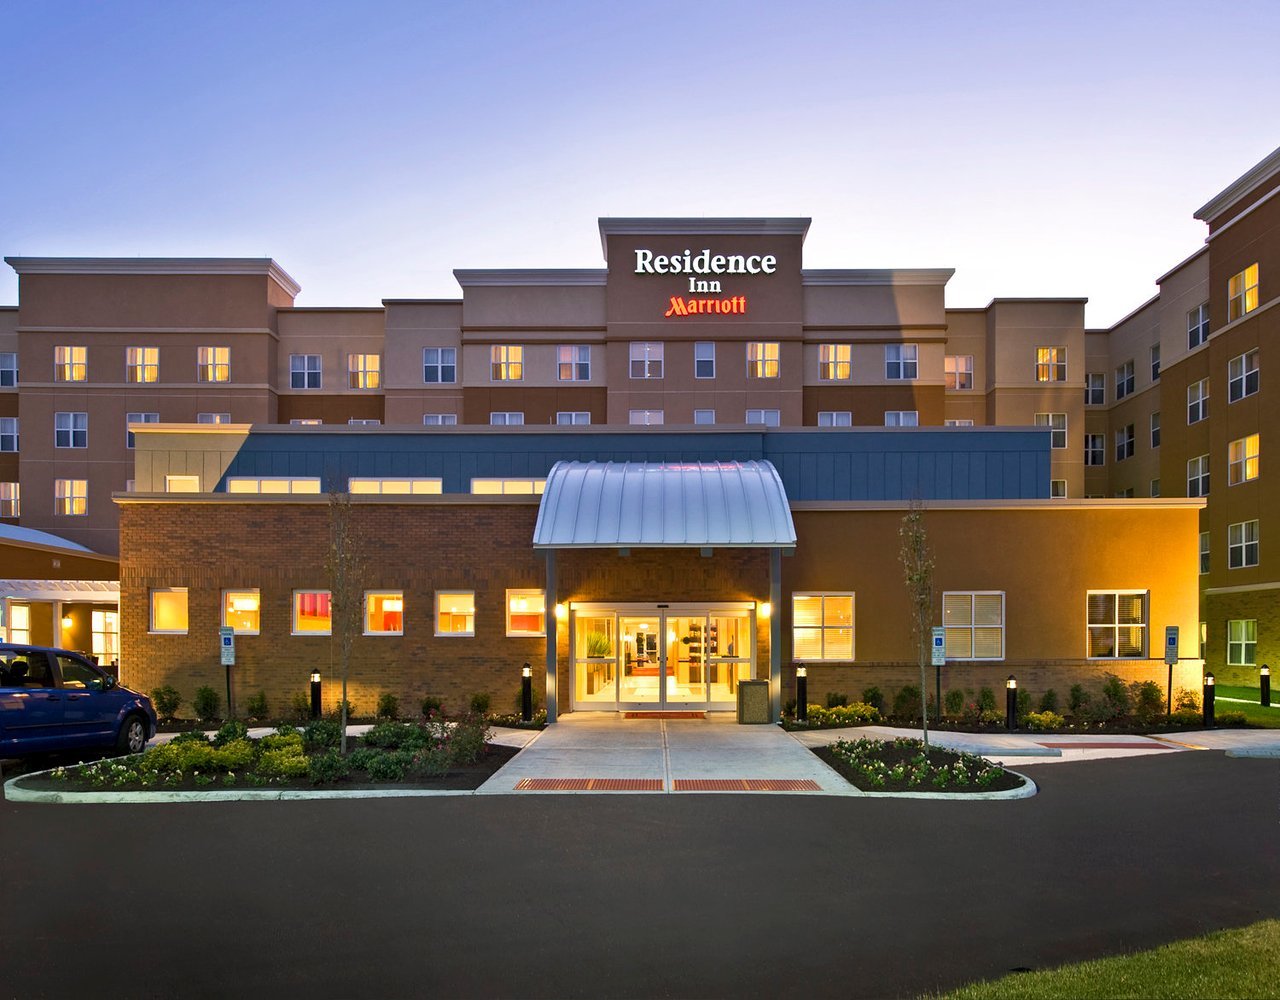 Photo of Residence Inn by Marriott Newport News Airport, Newport News, VA